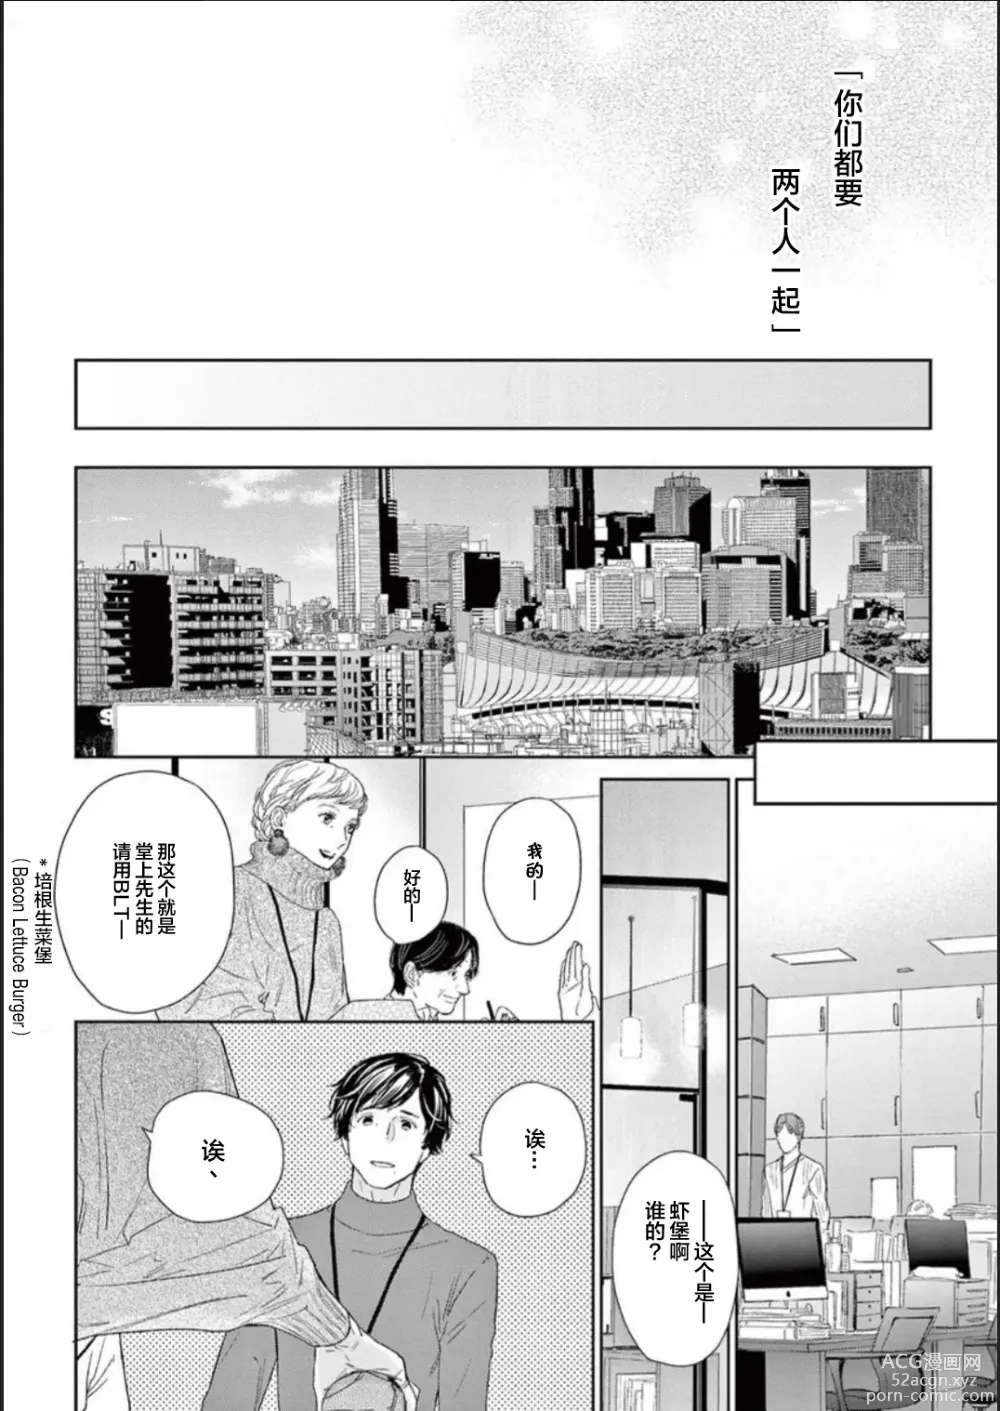 Page 206 of manga 透明的爱之所依